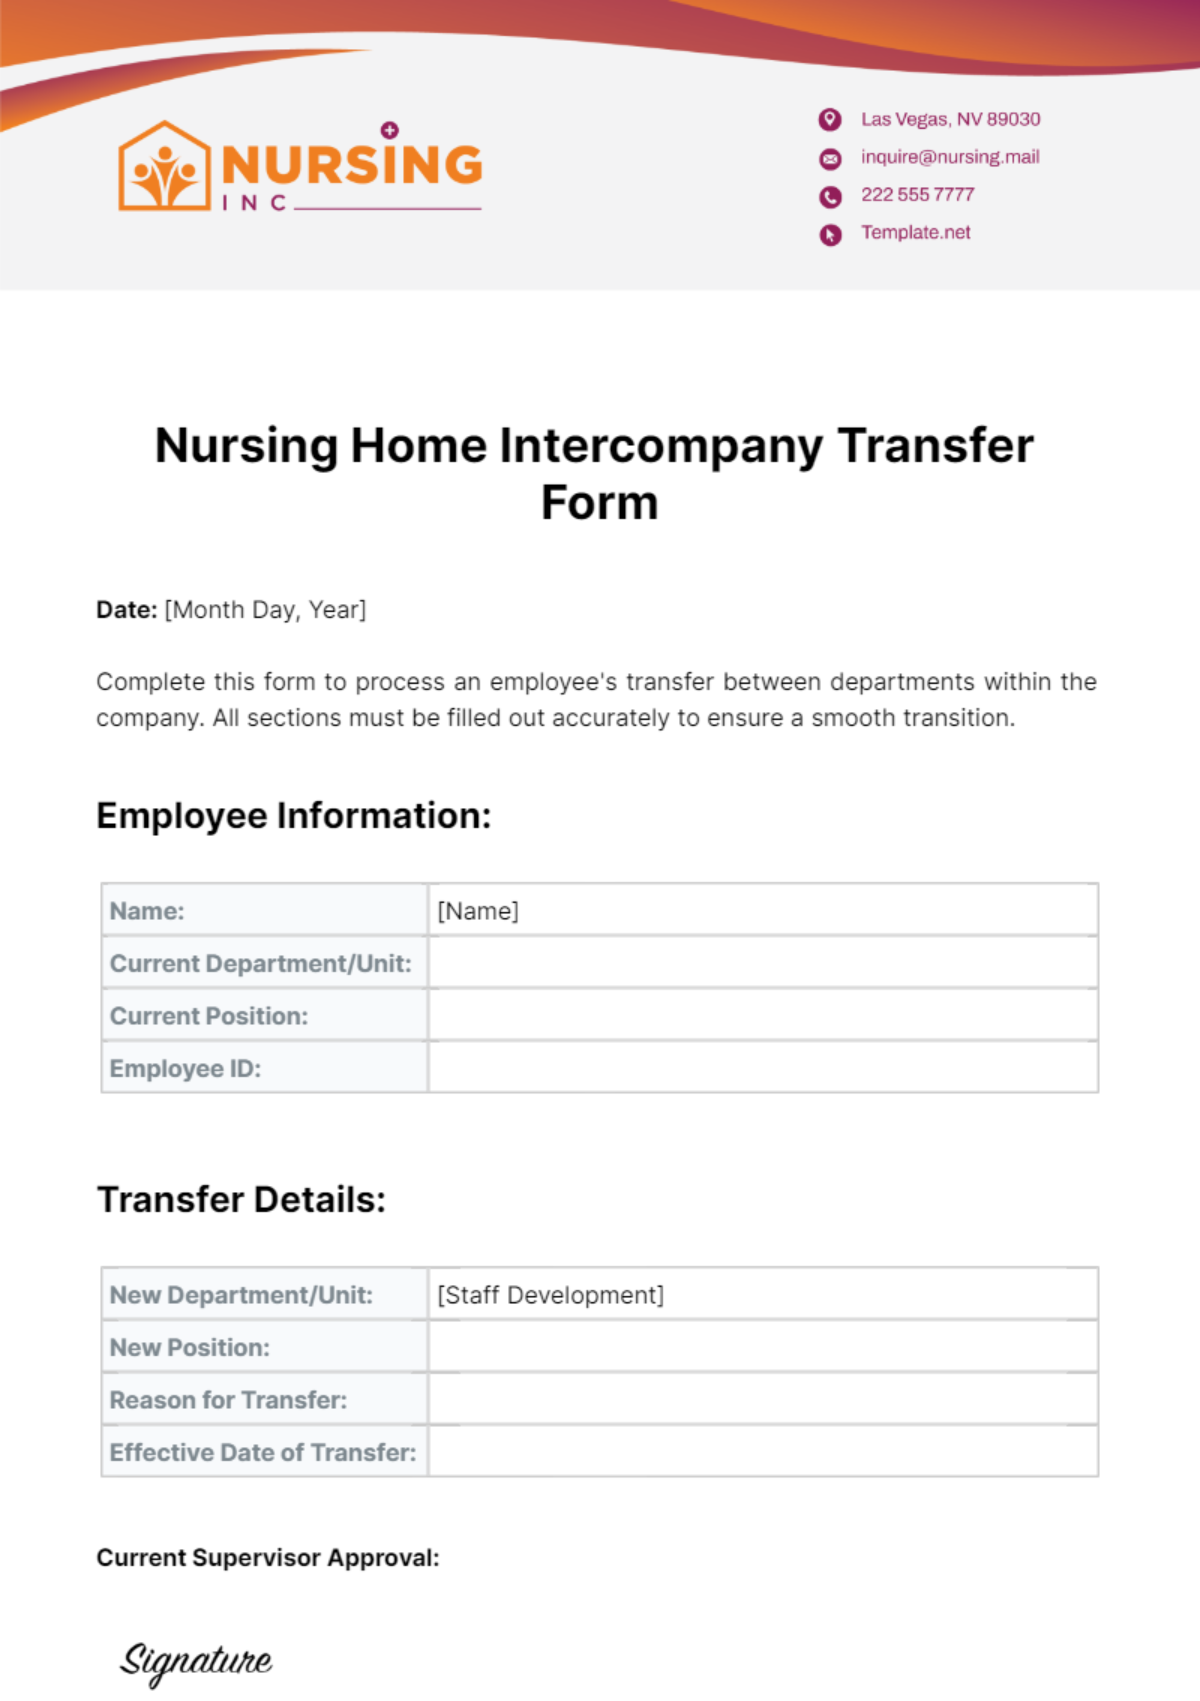 Nursing Home Intercompany Transfer Form Template